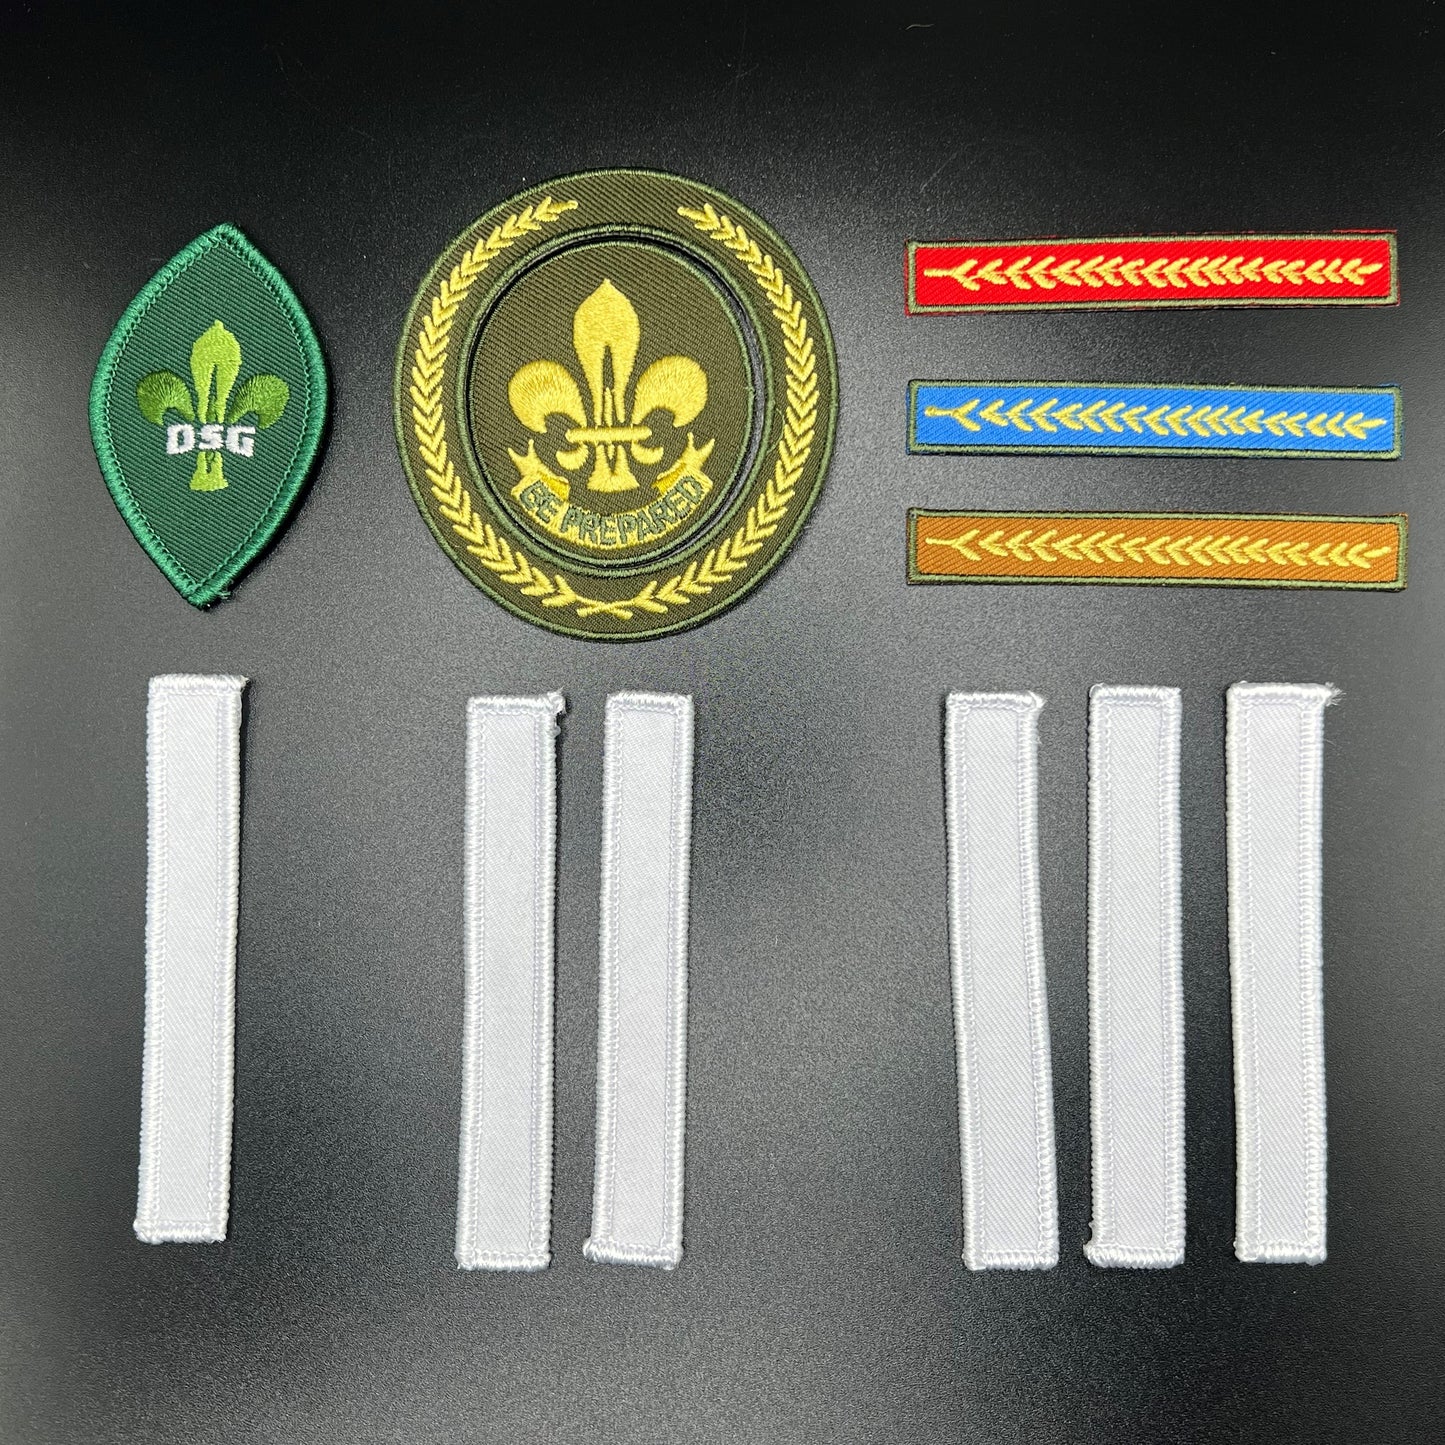 PF General Proficiency Badges (OSG)